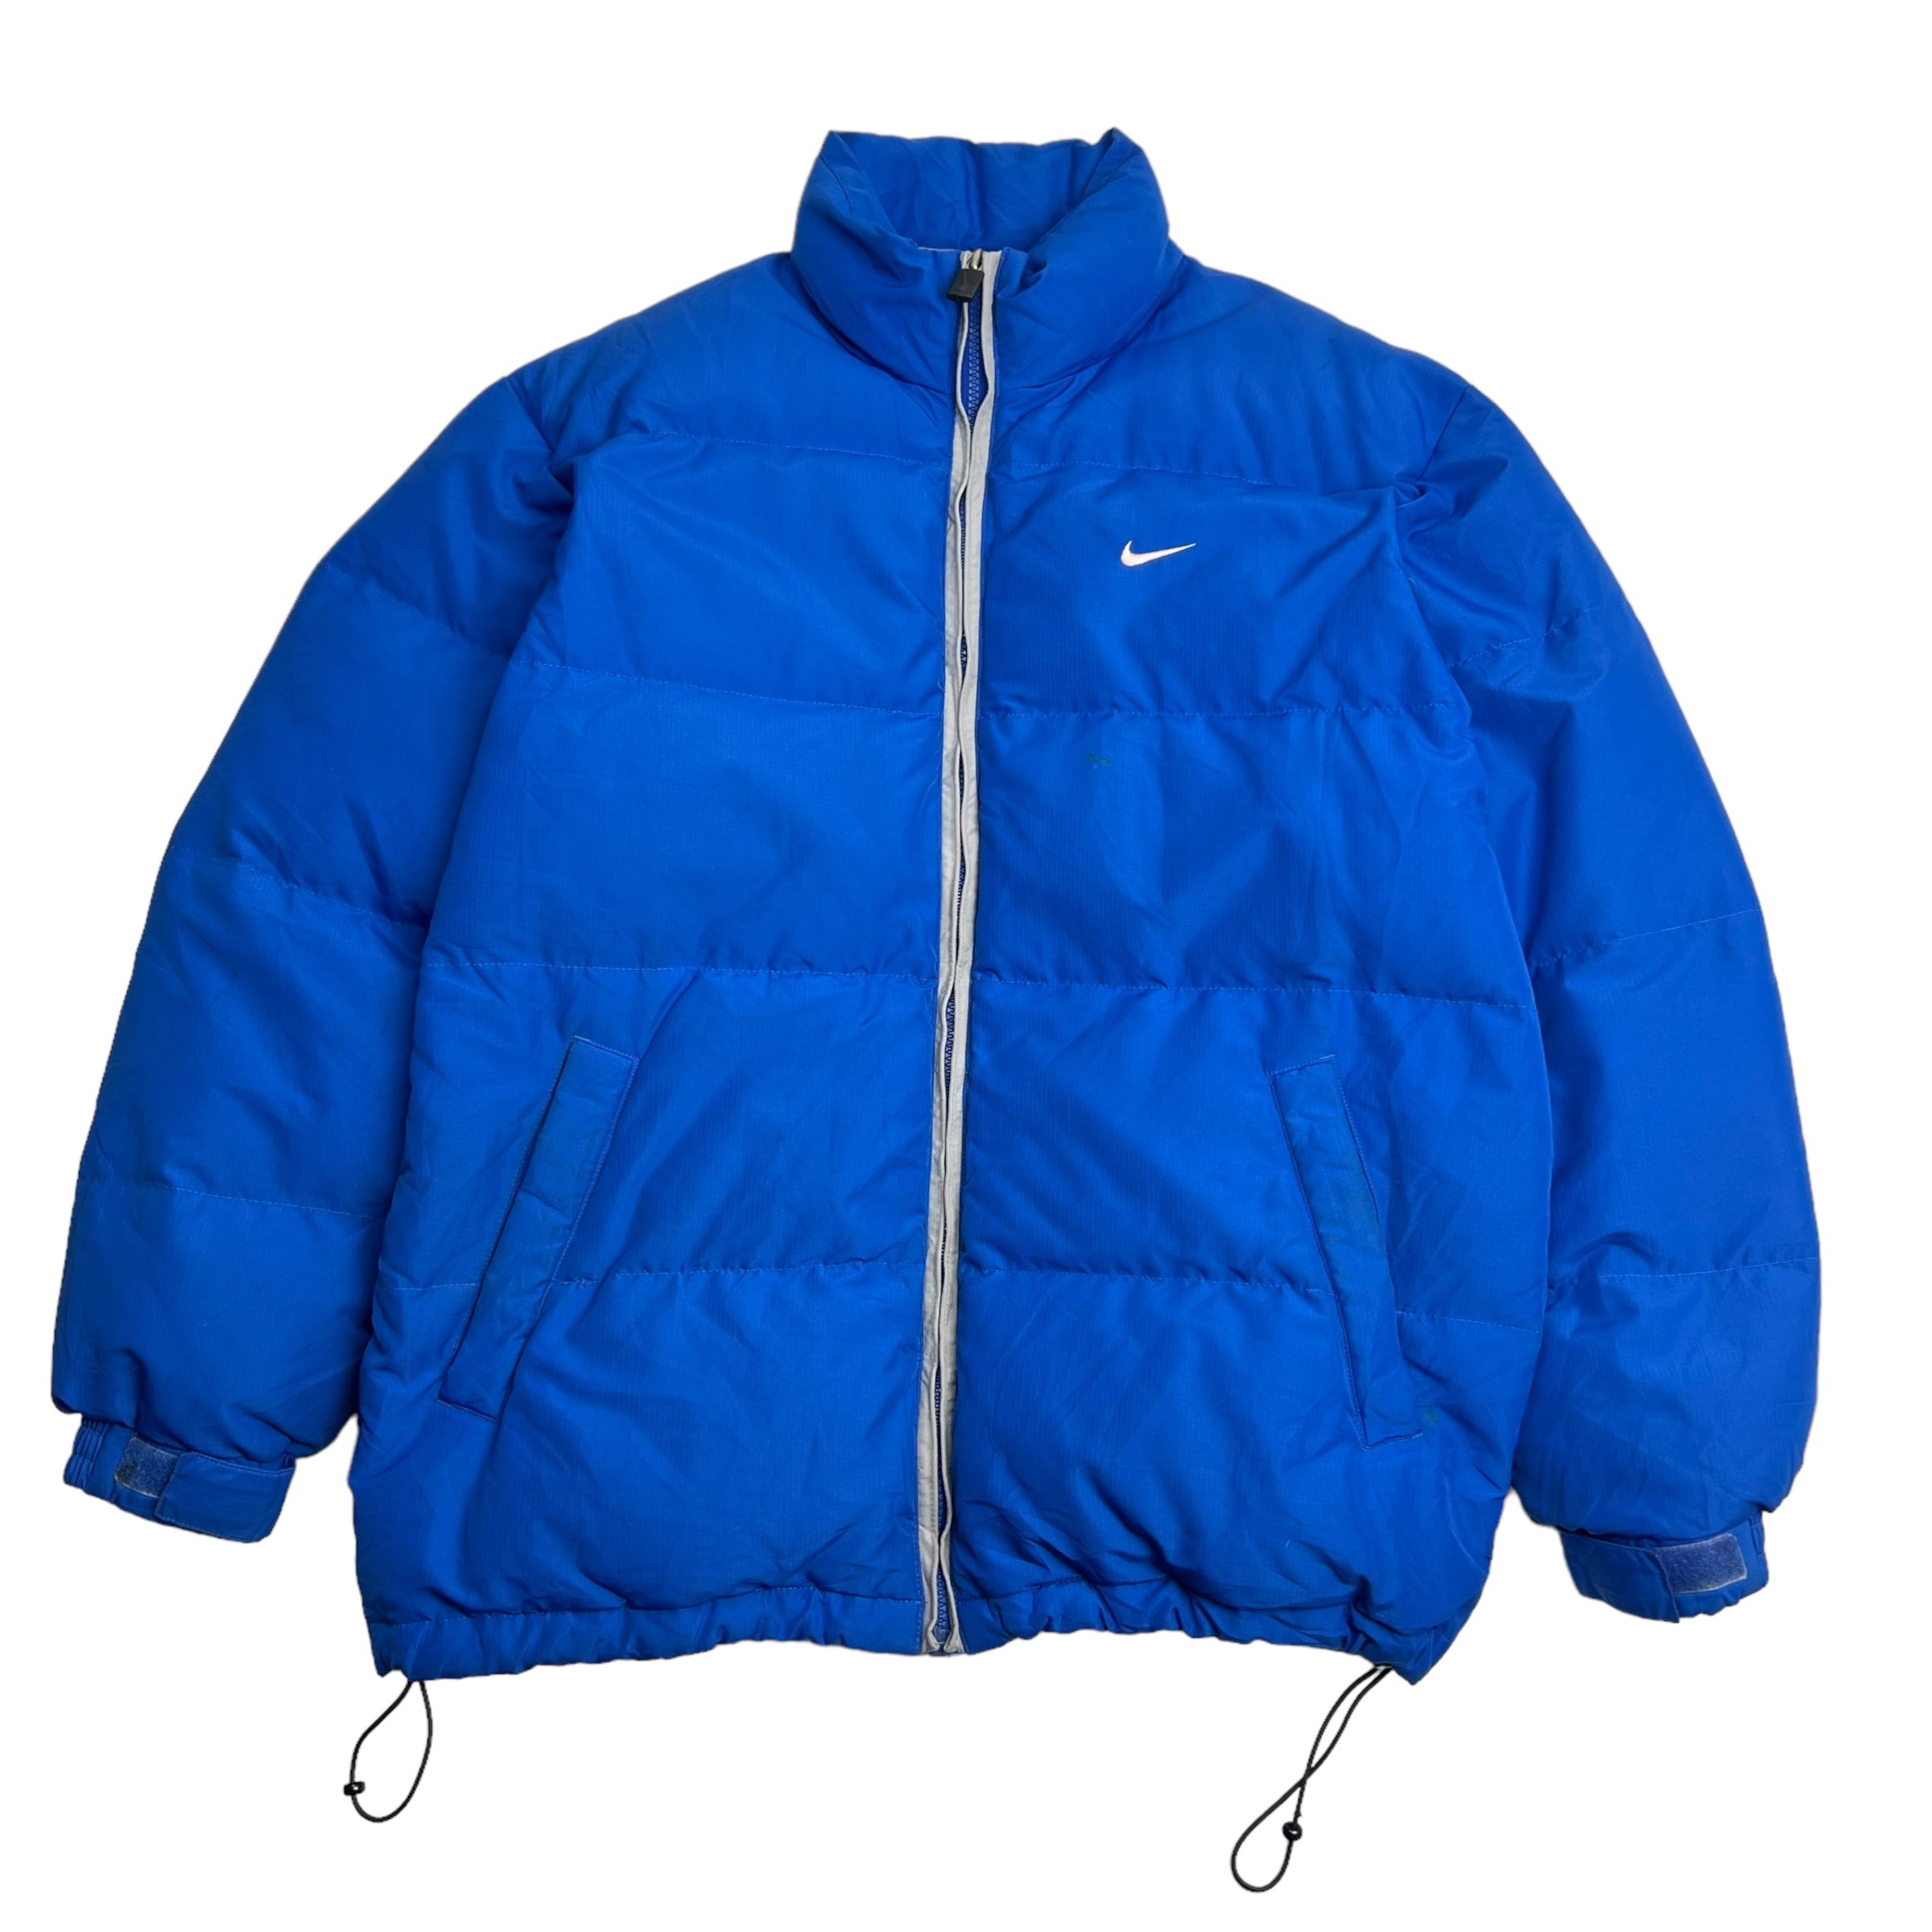 Vintage Nike Side Swoosh Puffer Jacket - Royal Blue Outerwear